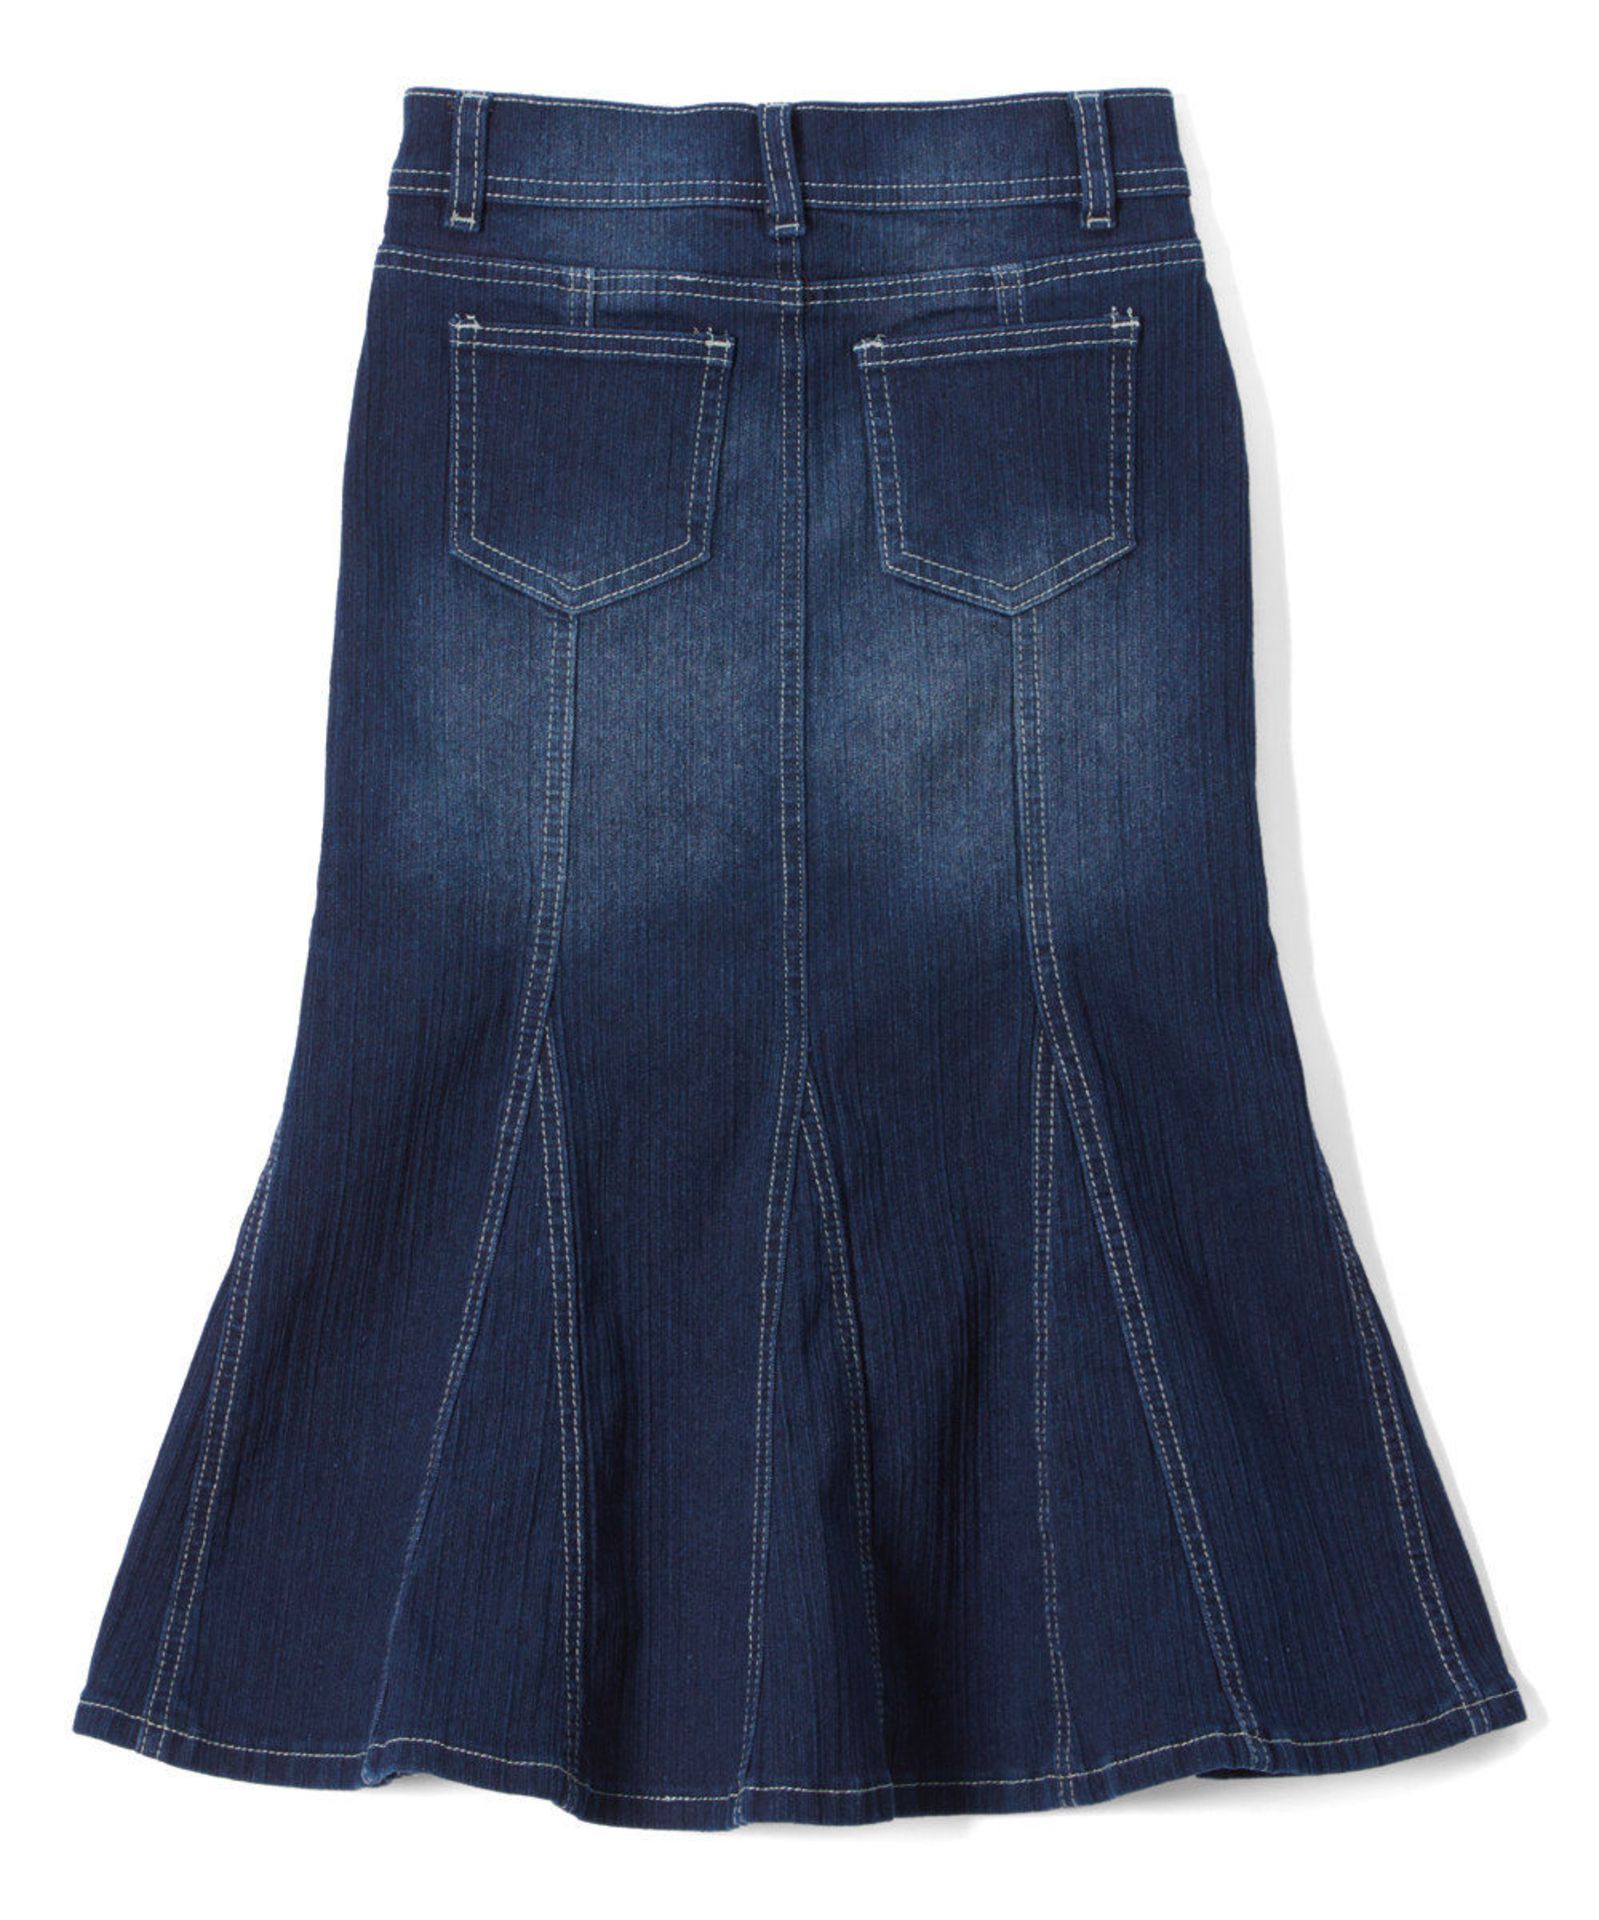 G-Gossip Dark Indigo Mermaid Maxi Skirt (Size Small) (New with tags) [Ref: 46036335- T-57] - Image 2 of 2